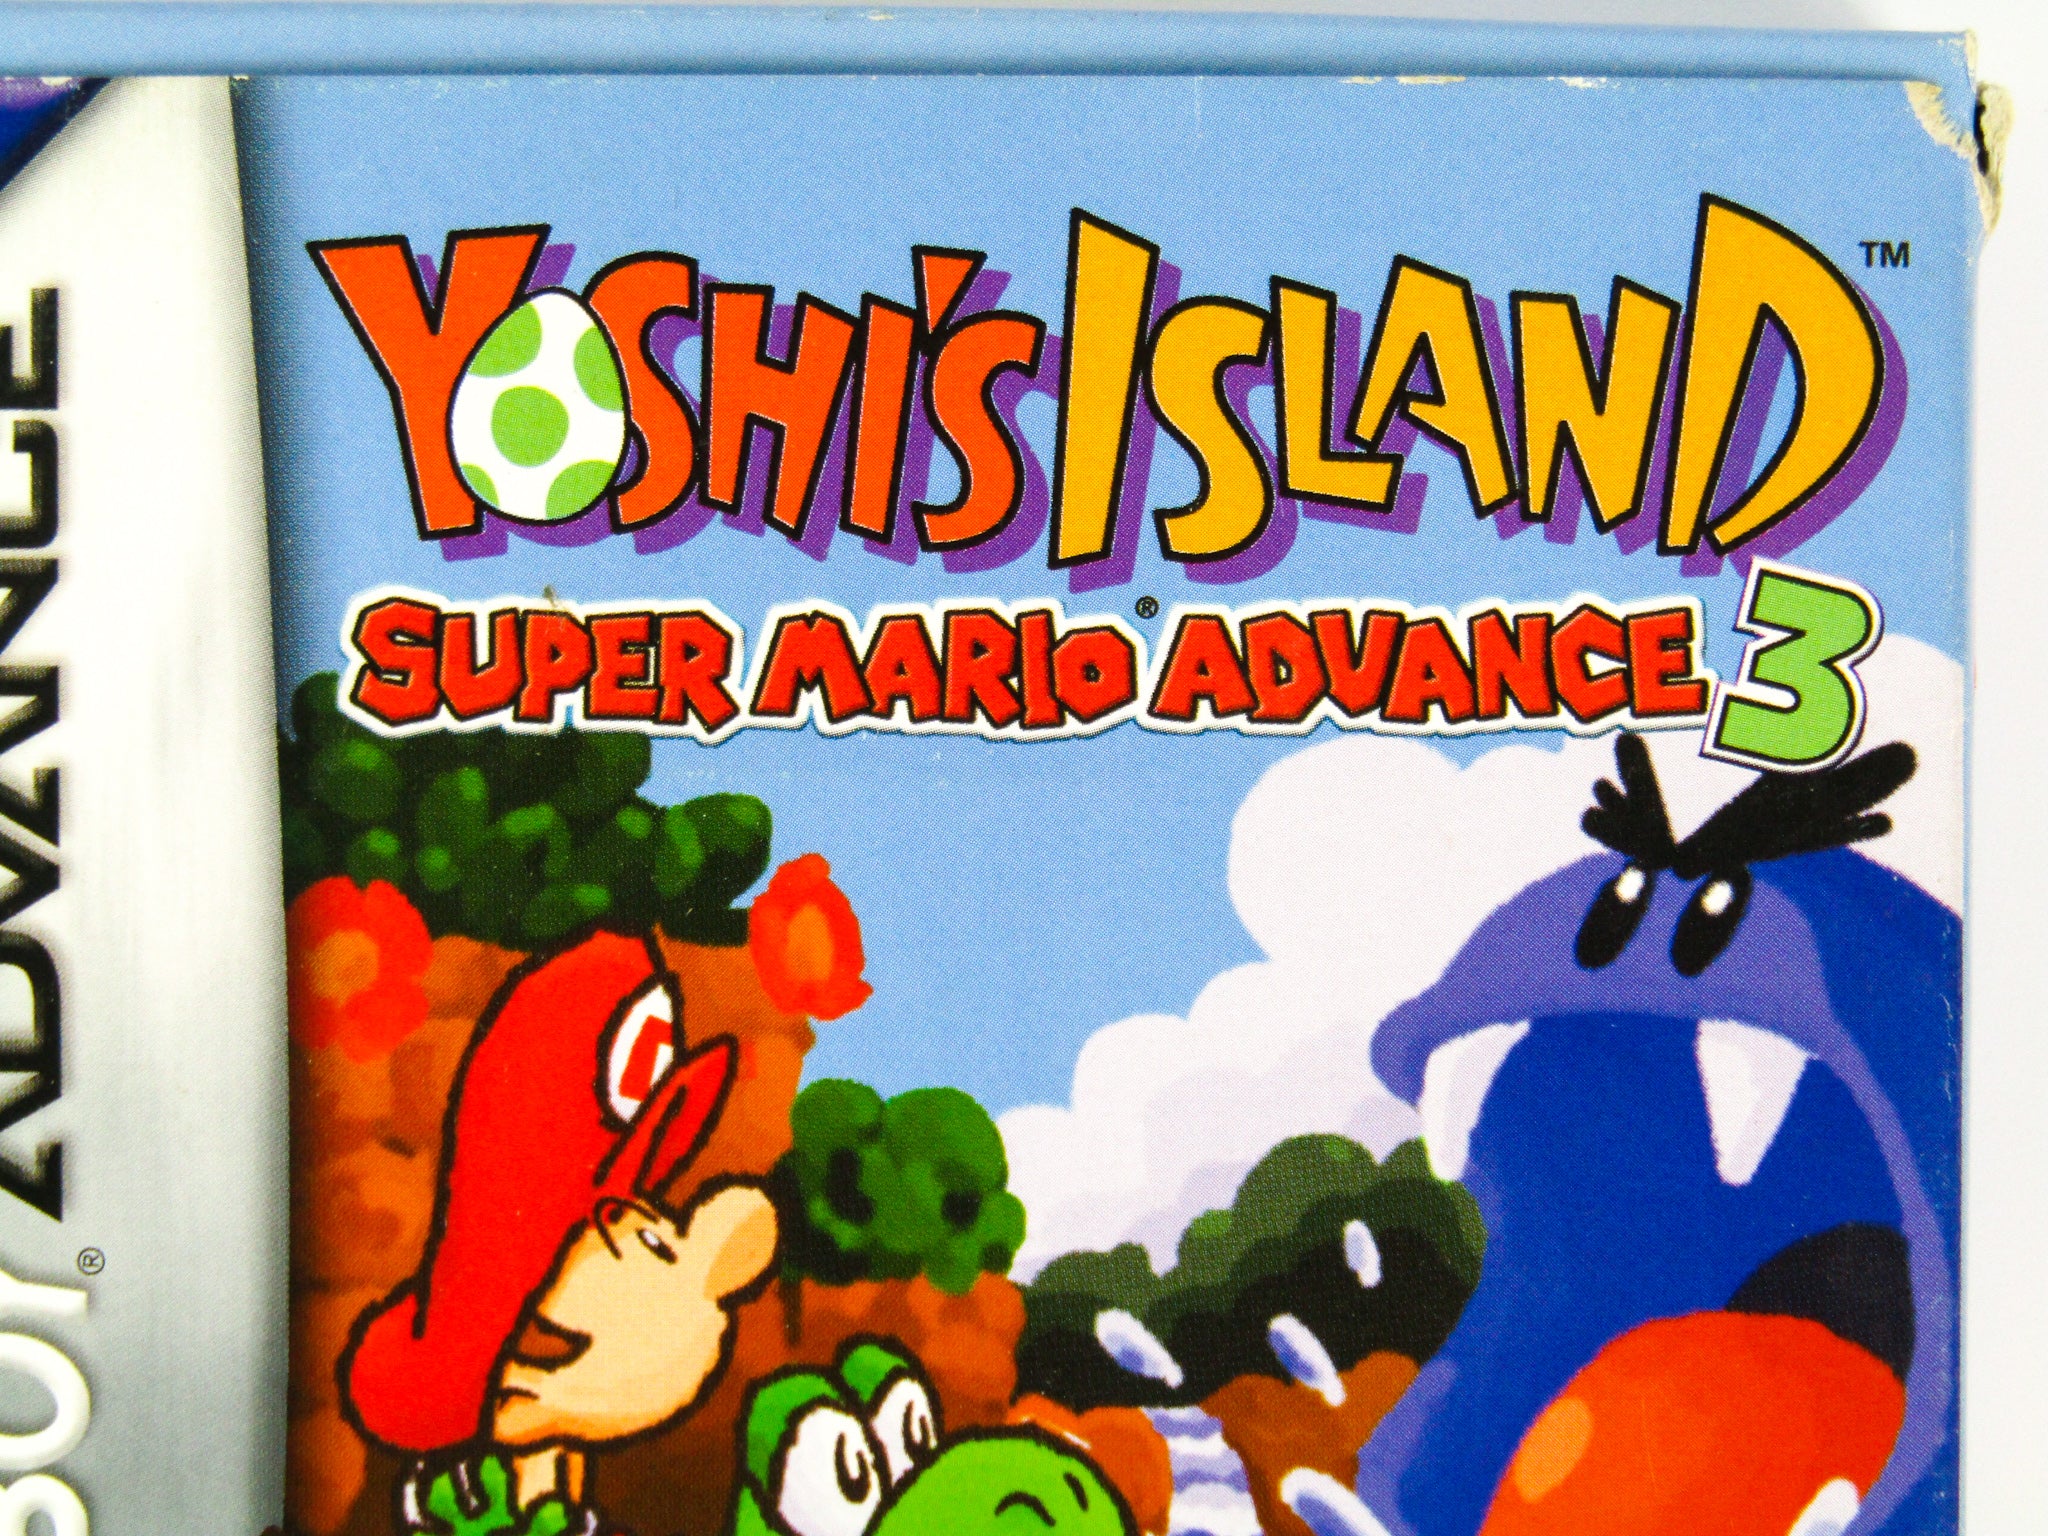 Yoshi's Island - Super Mario Advance 3 ROM Download - GameBoy Advance(GBA)